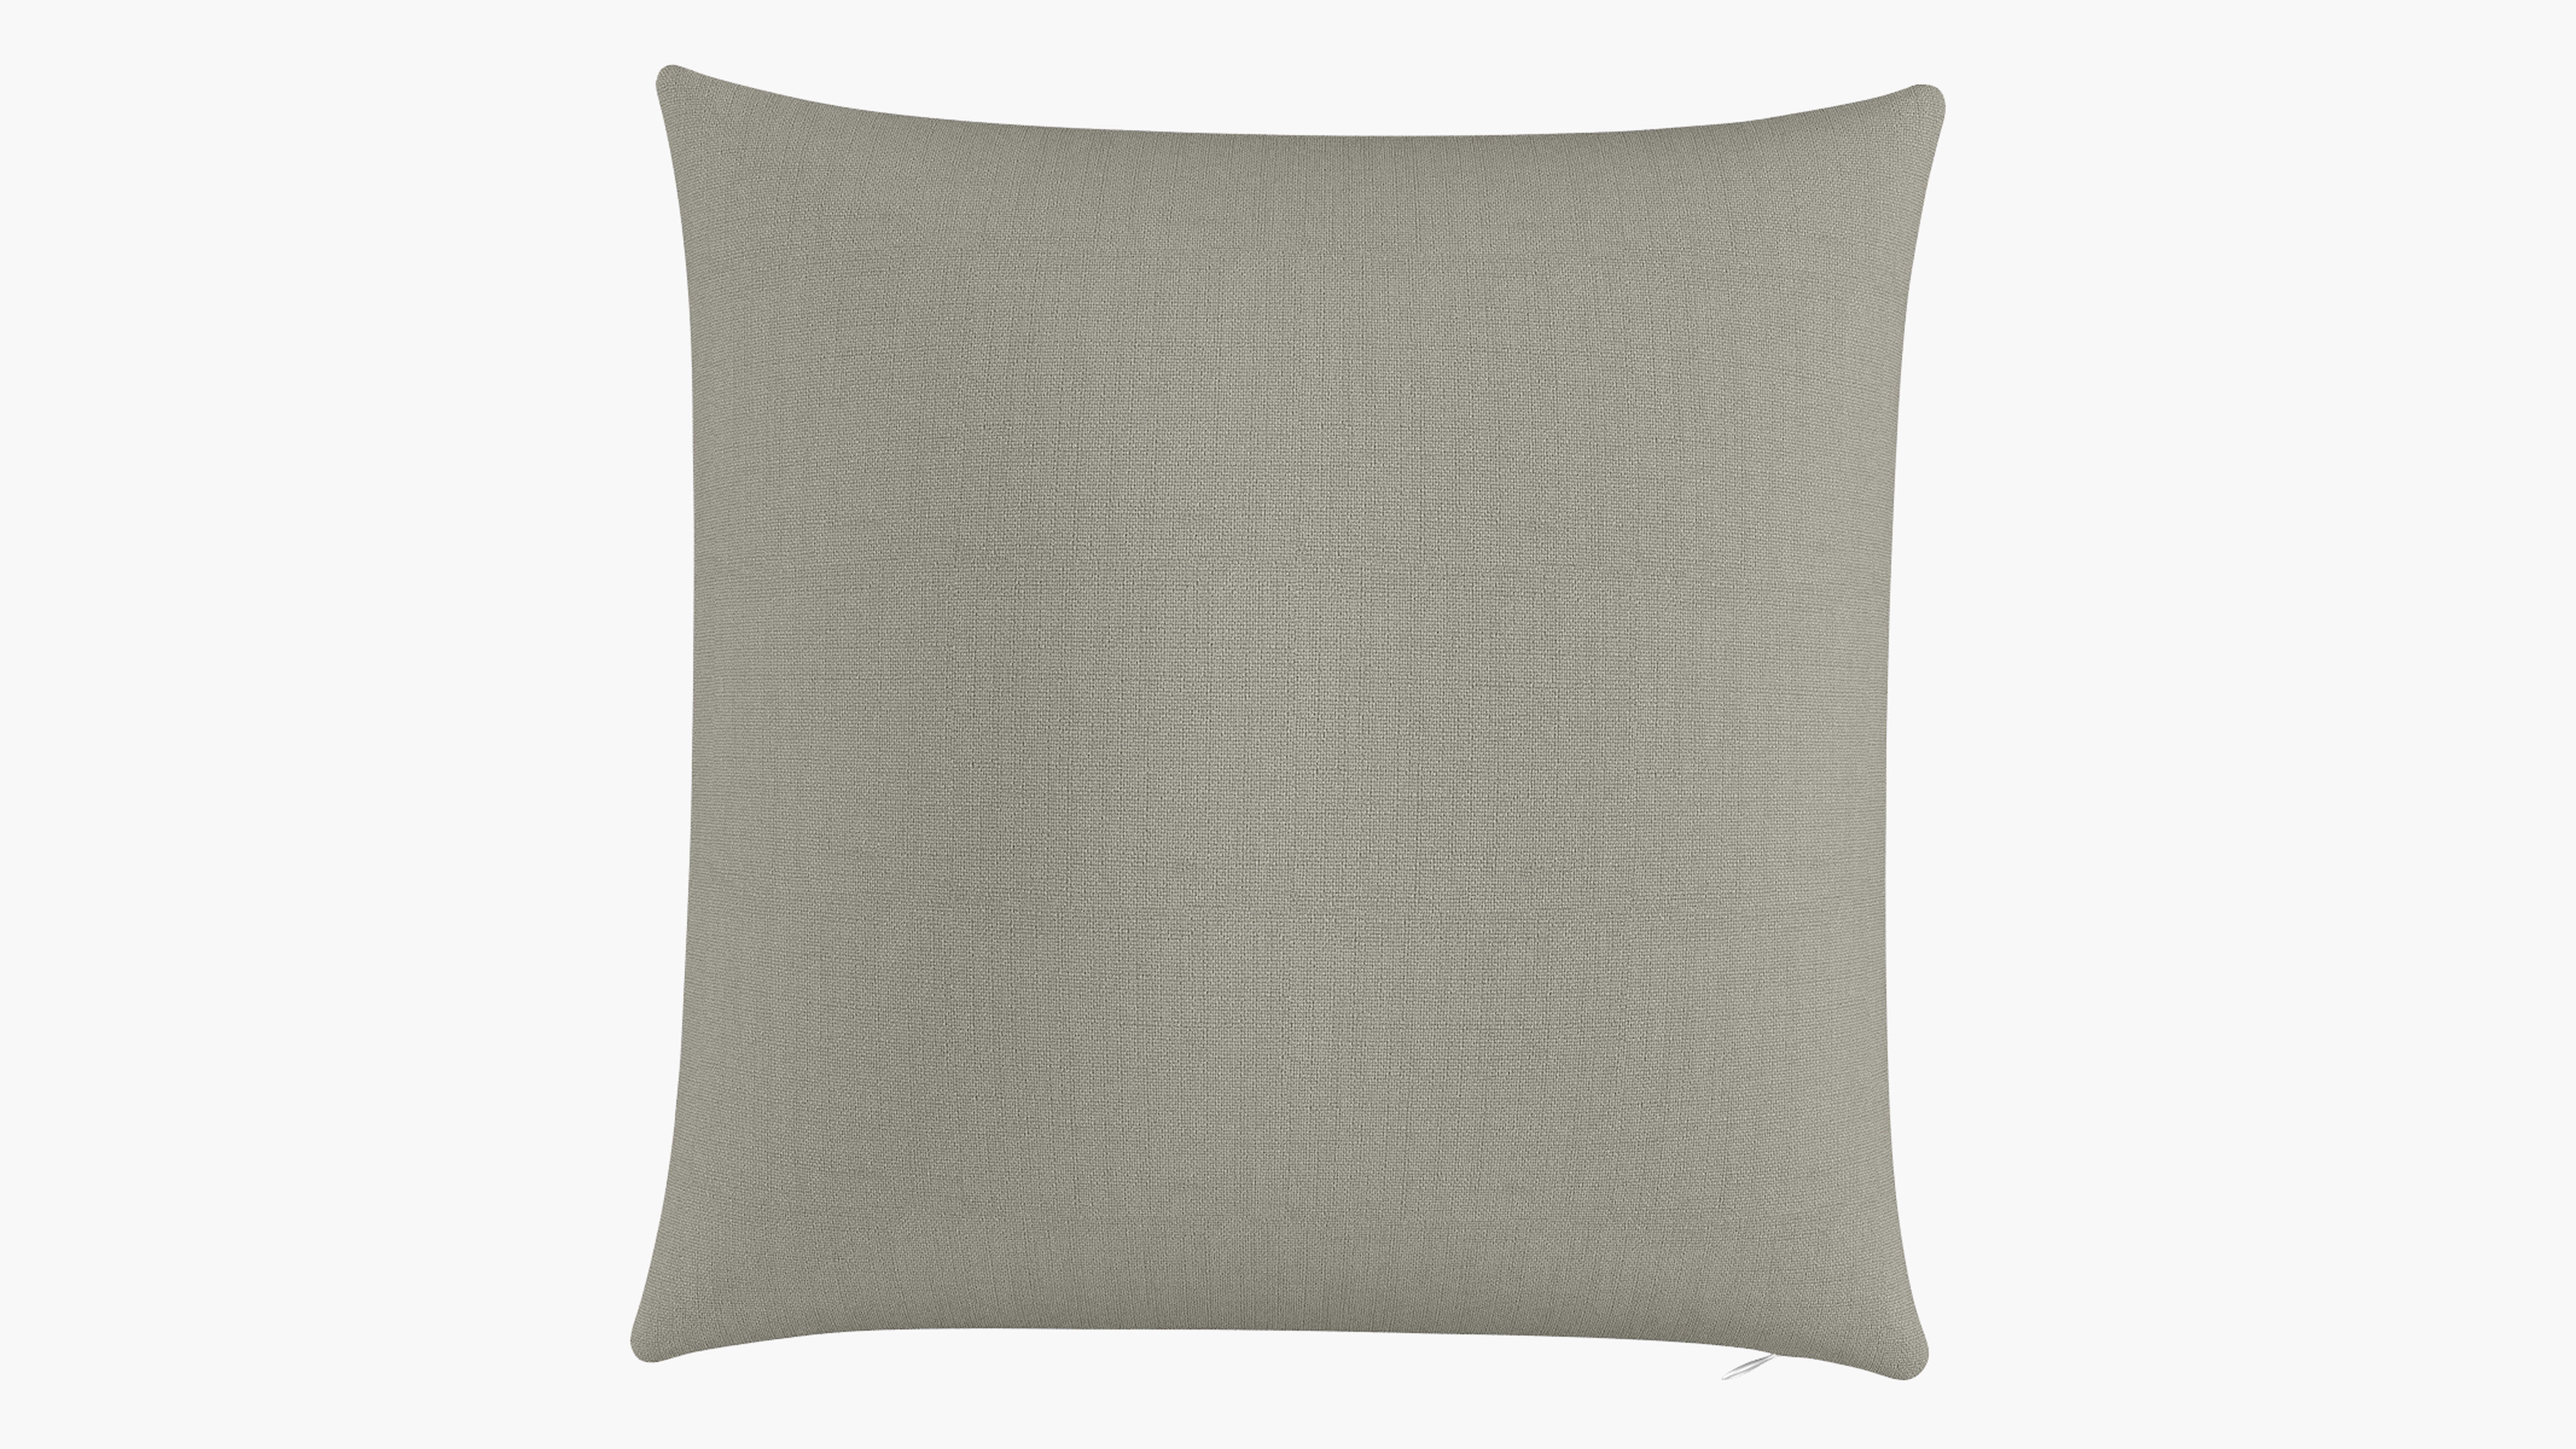 Throw Pillow 22", Putty Everyday Linen, 22" x 22" - The Inside